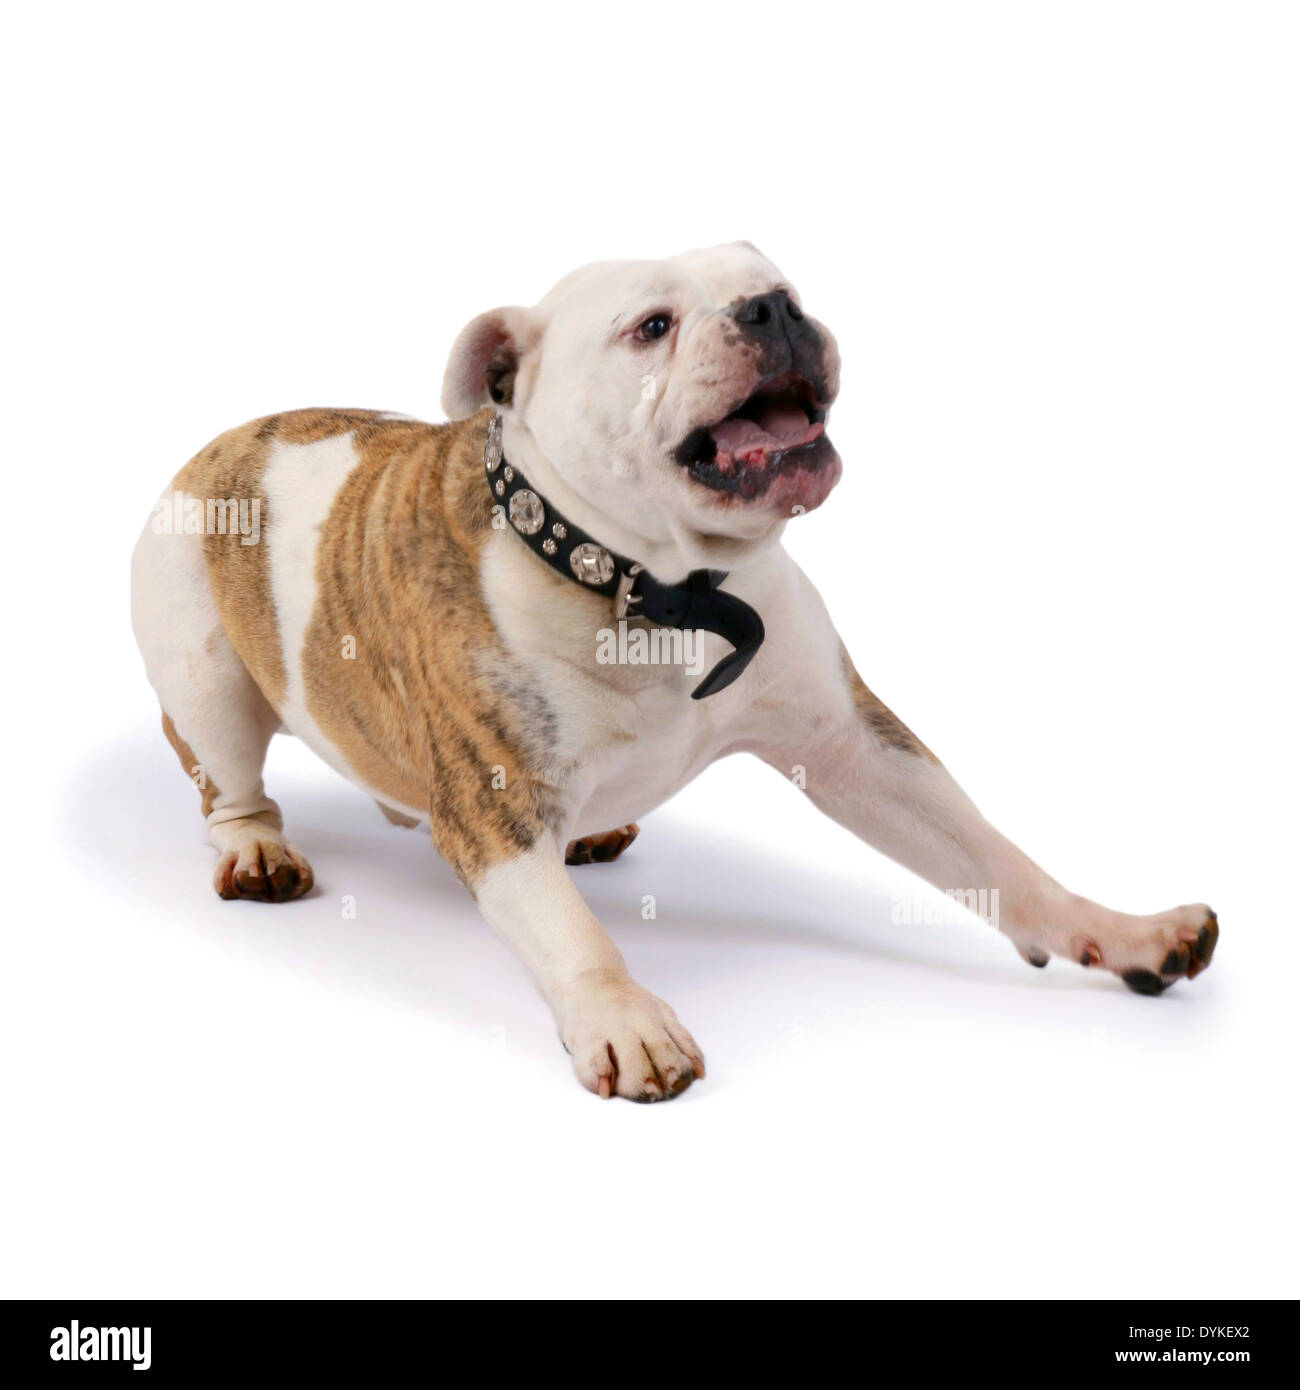 Englische Bulldogge, Canis Lupus F. Familiaris, English Bulldog, Englische Bulldogge Vor Weissen Hintergrund Stockfoto